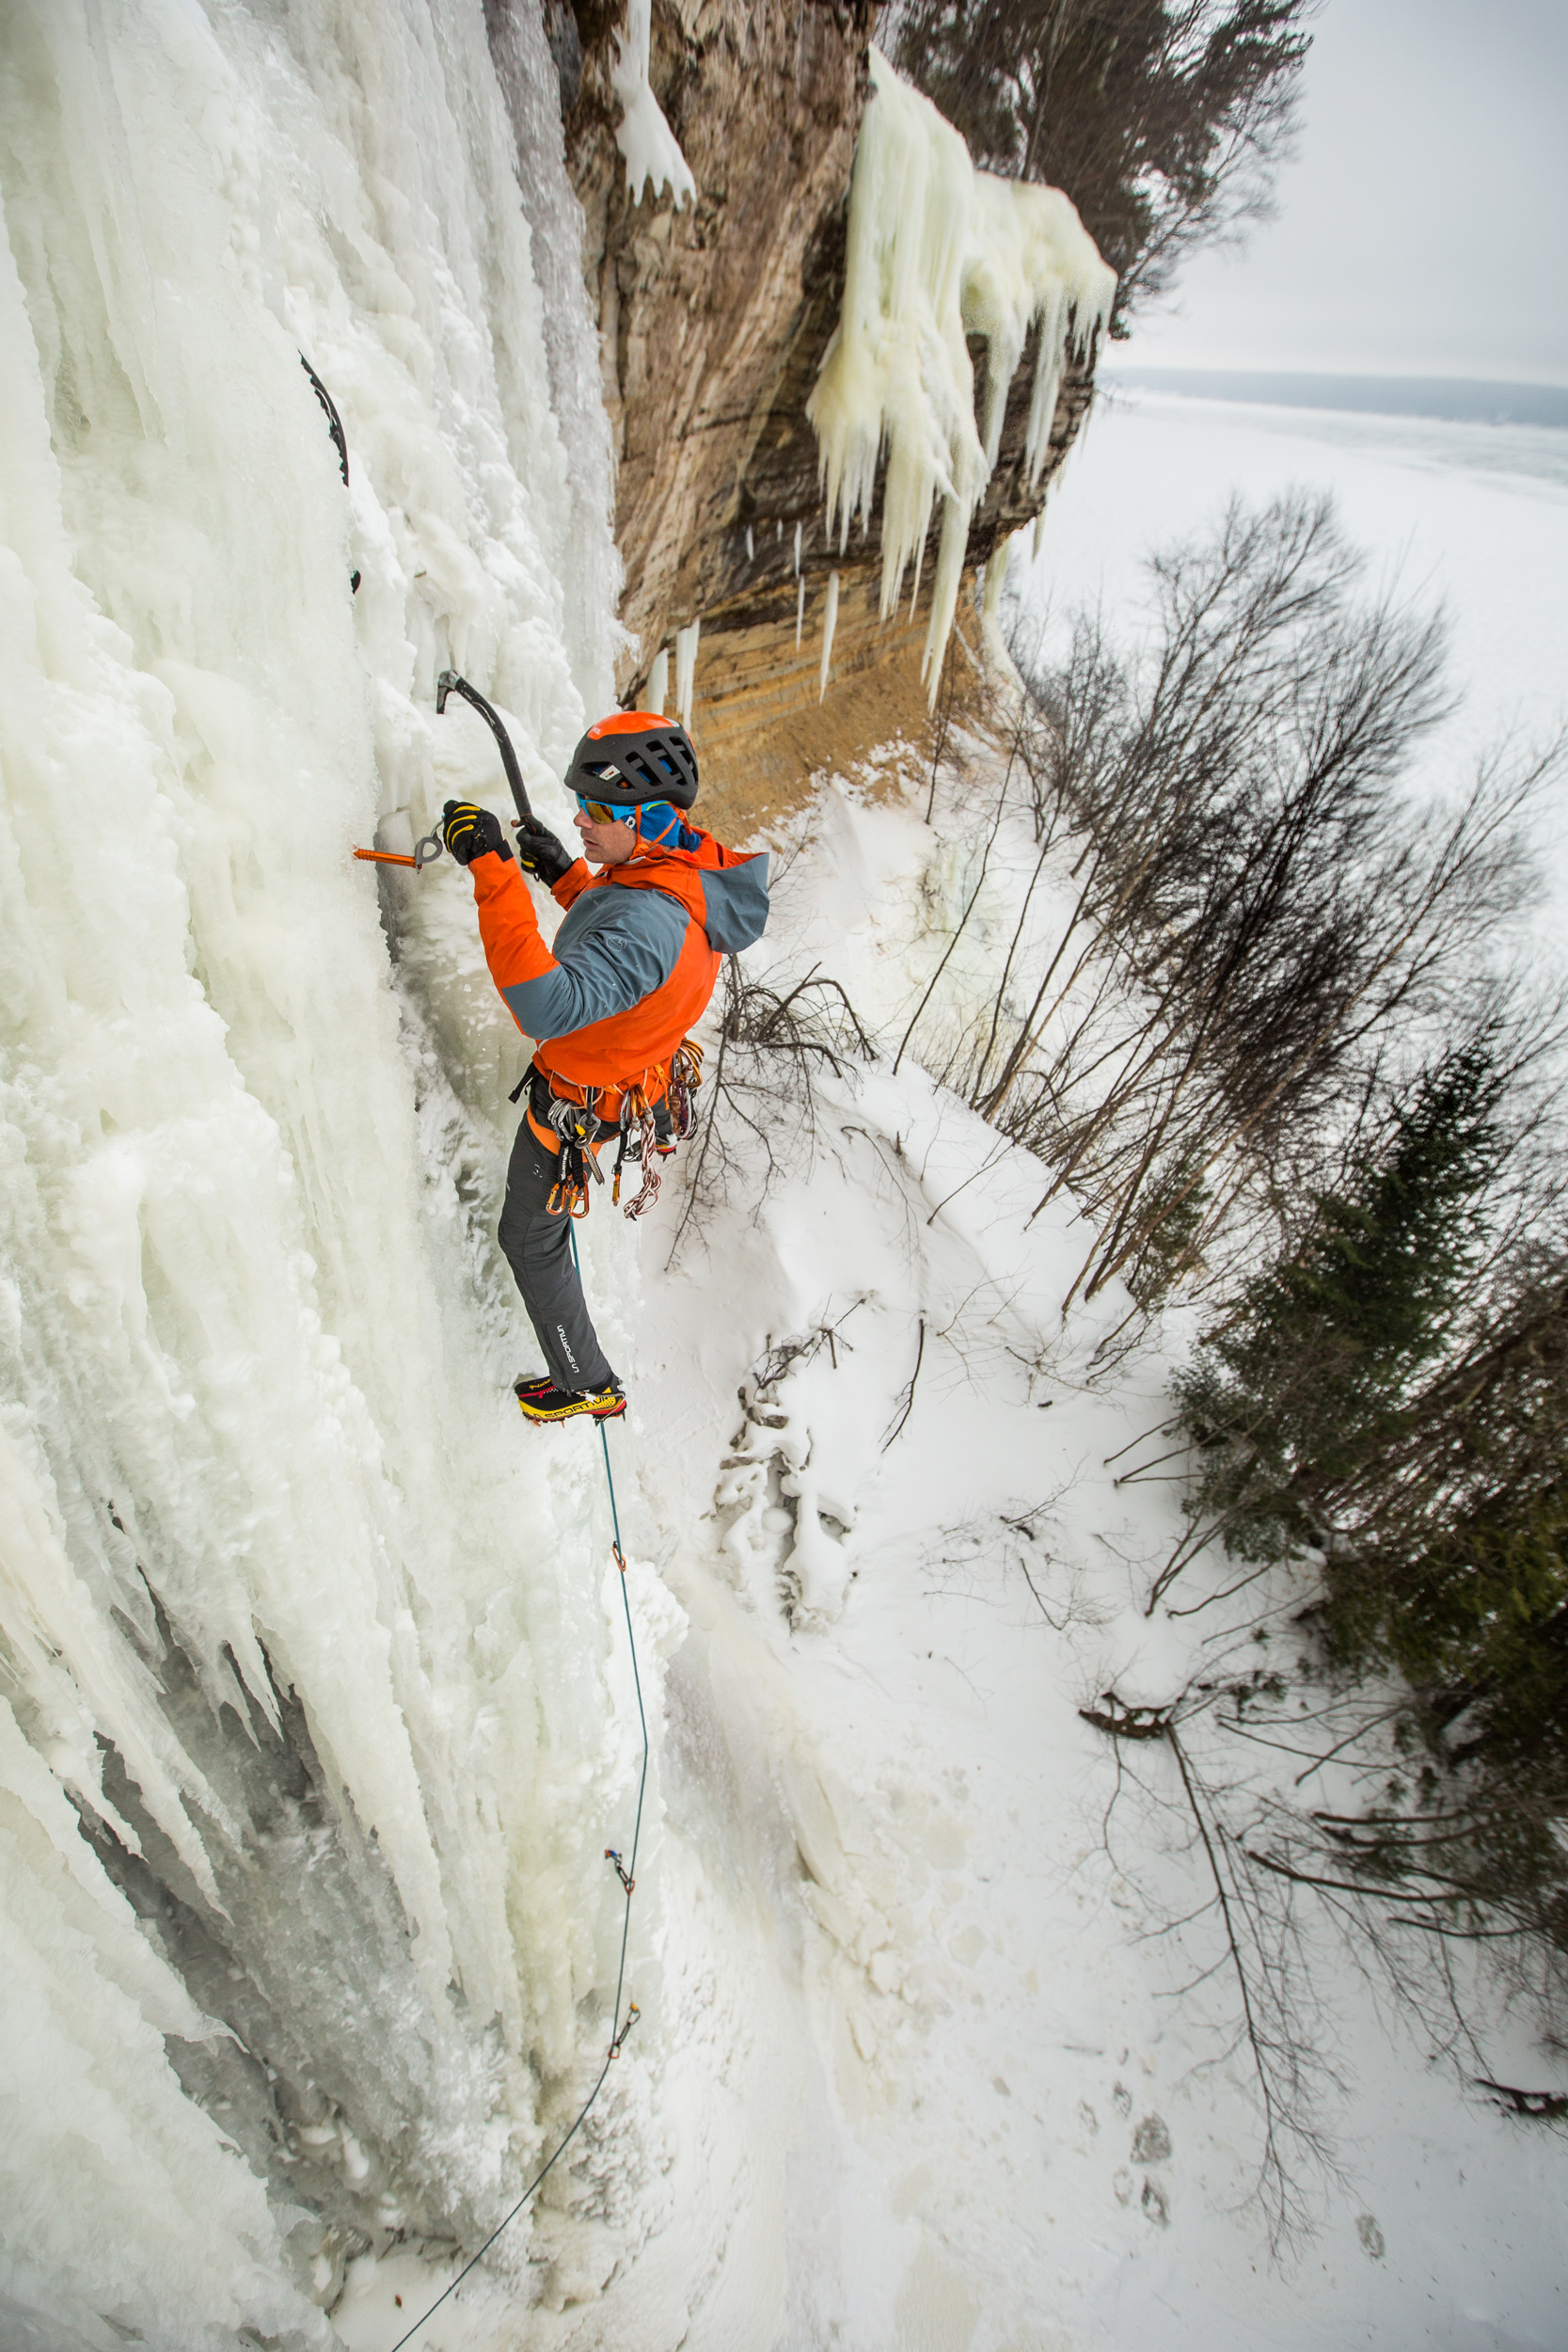  Karsten Delap climbs "El Lanzon" along the Pictured Rocks National Lakeshore in Munising, Michigan. 